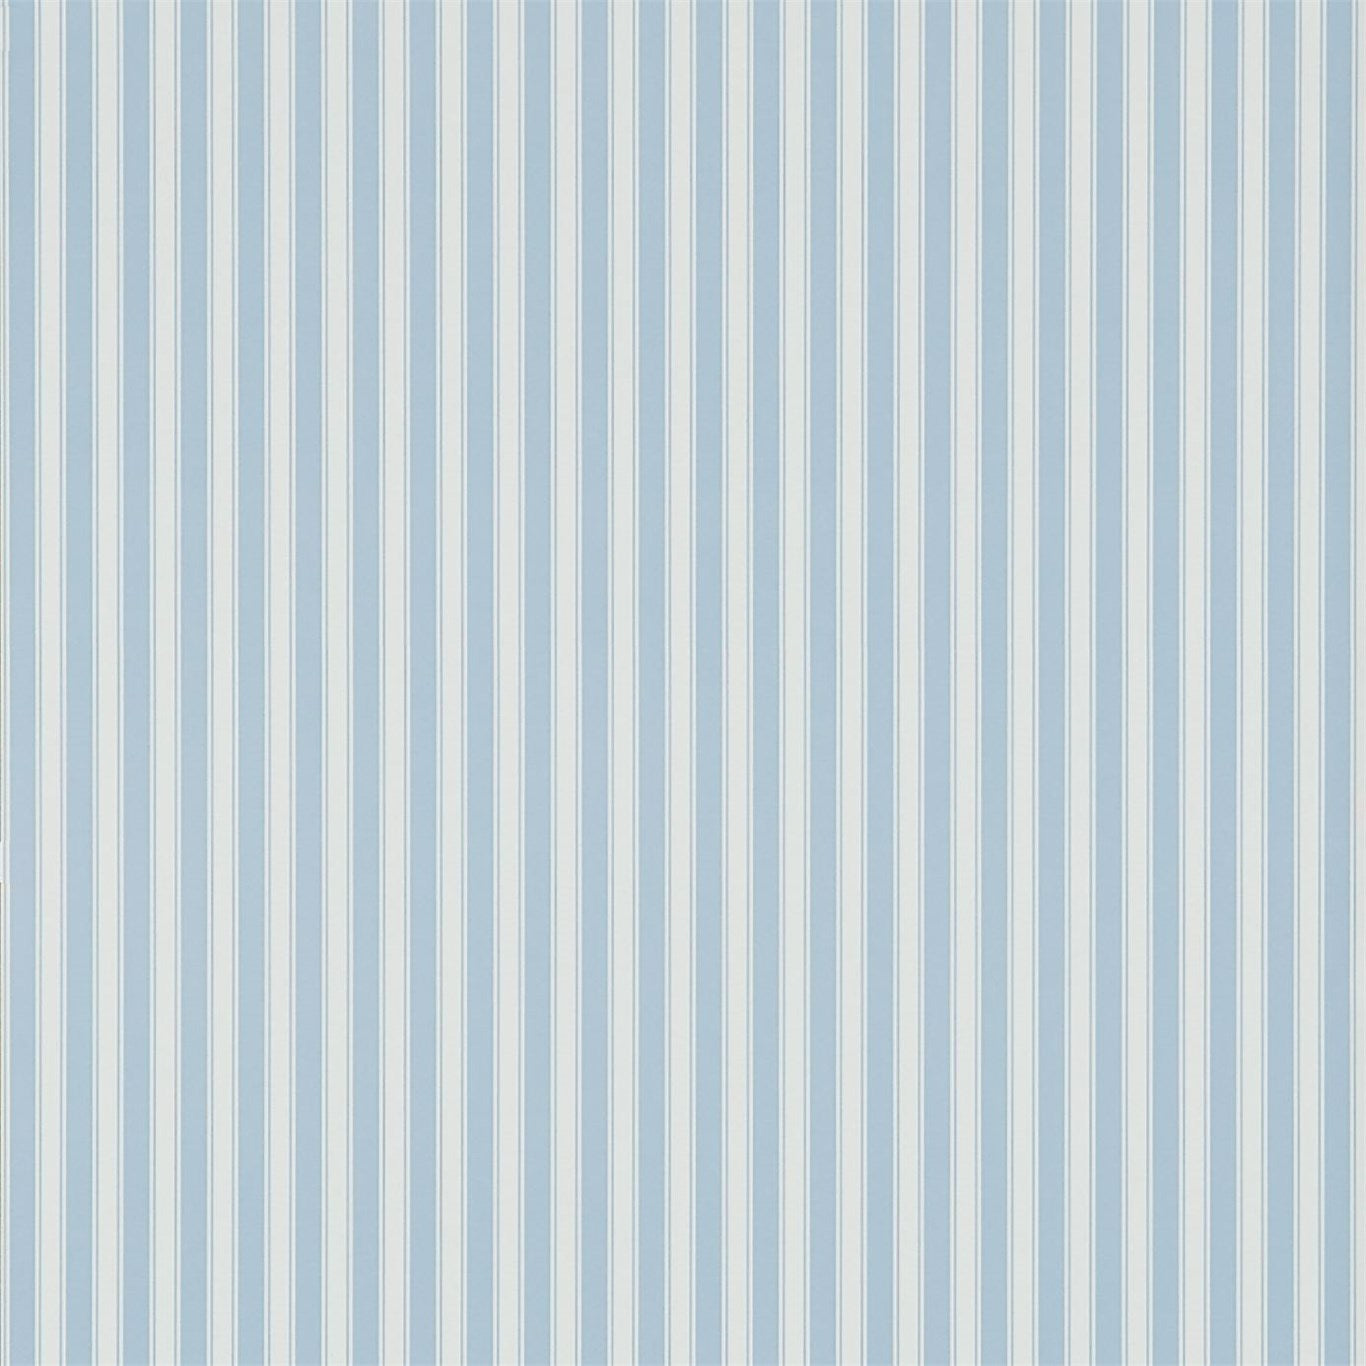 New Tiger Stripe Blue/Ivory Wallpaper DCAVTP106 by Sanderson